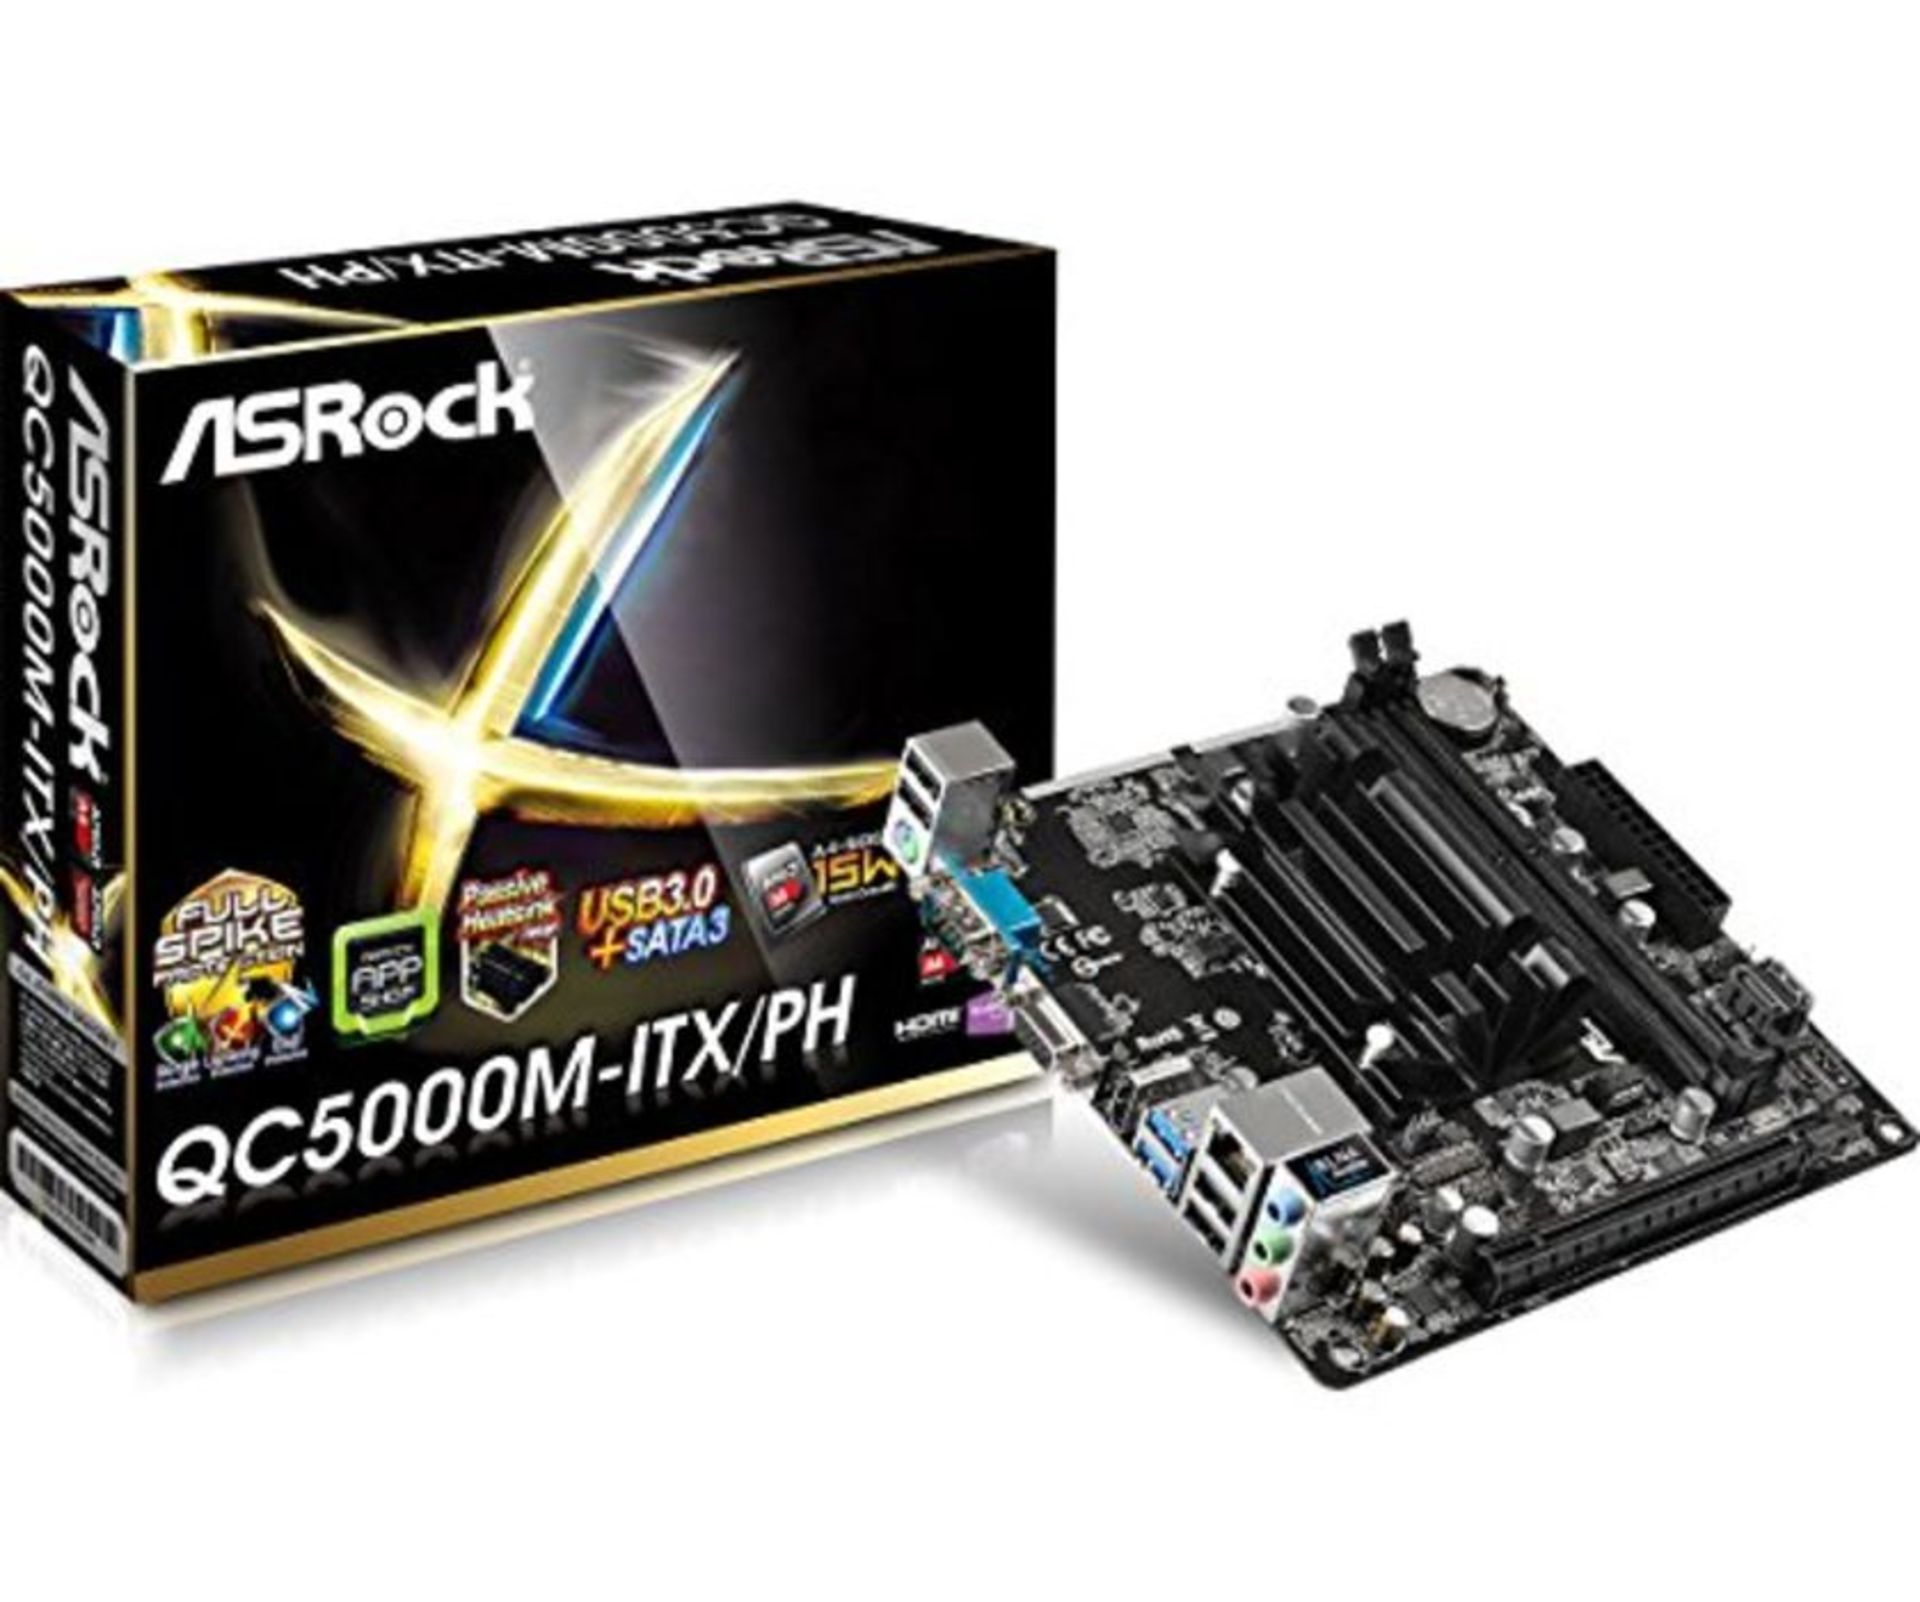 RRP £79.00 ASRock QC5000M-ITX/PH Passive Heat sink AMD Motherboard